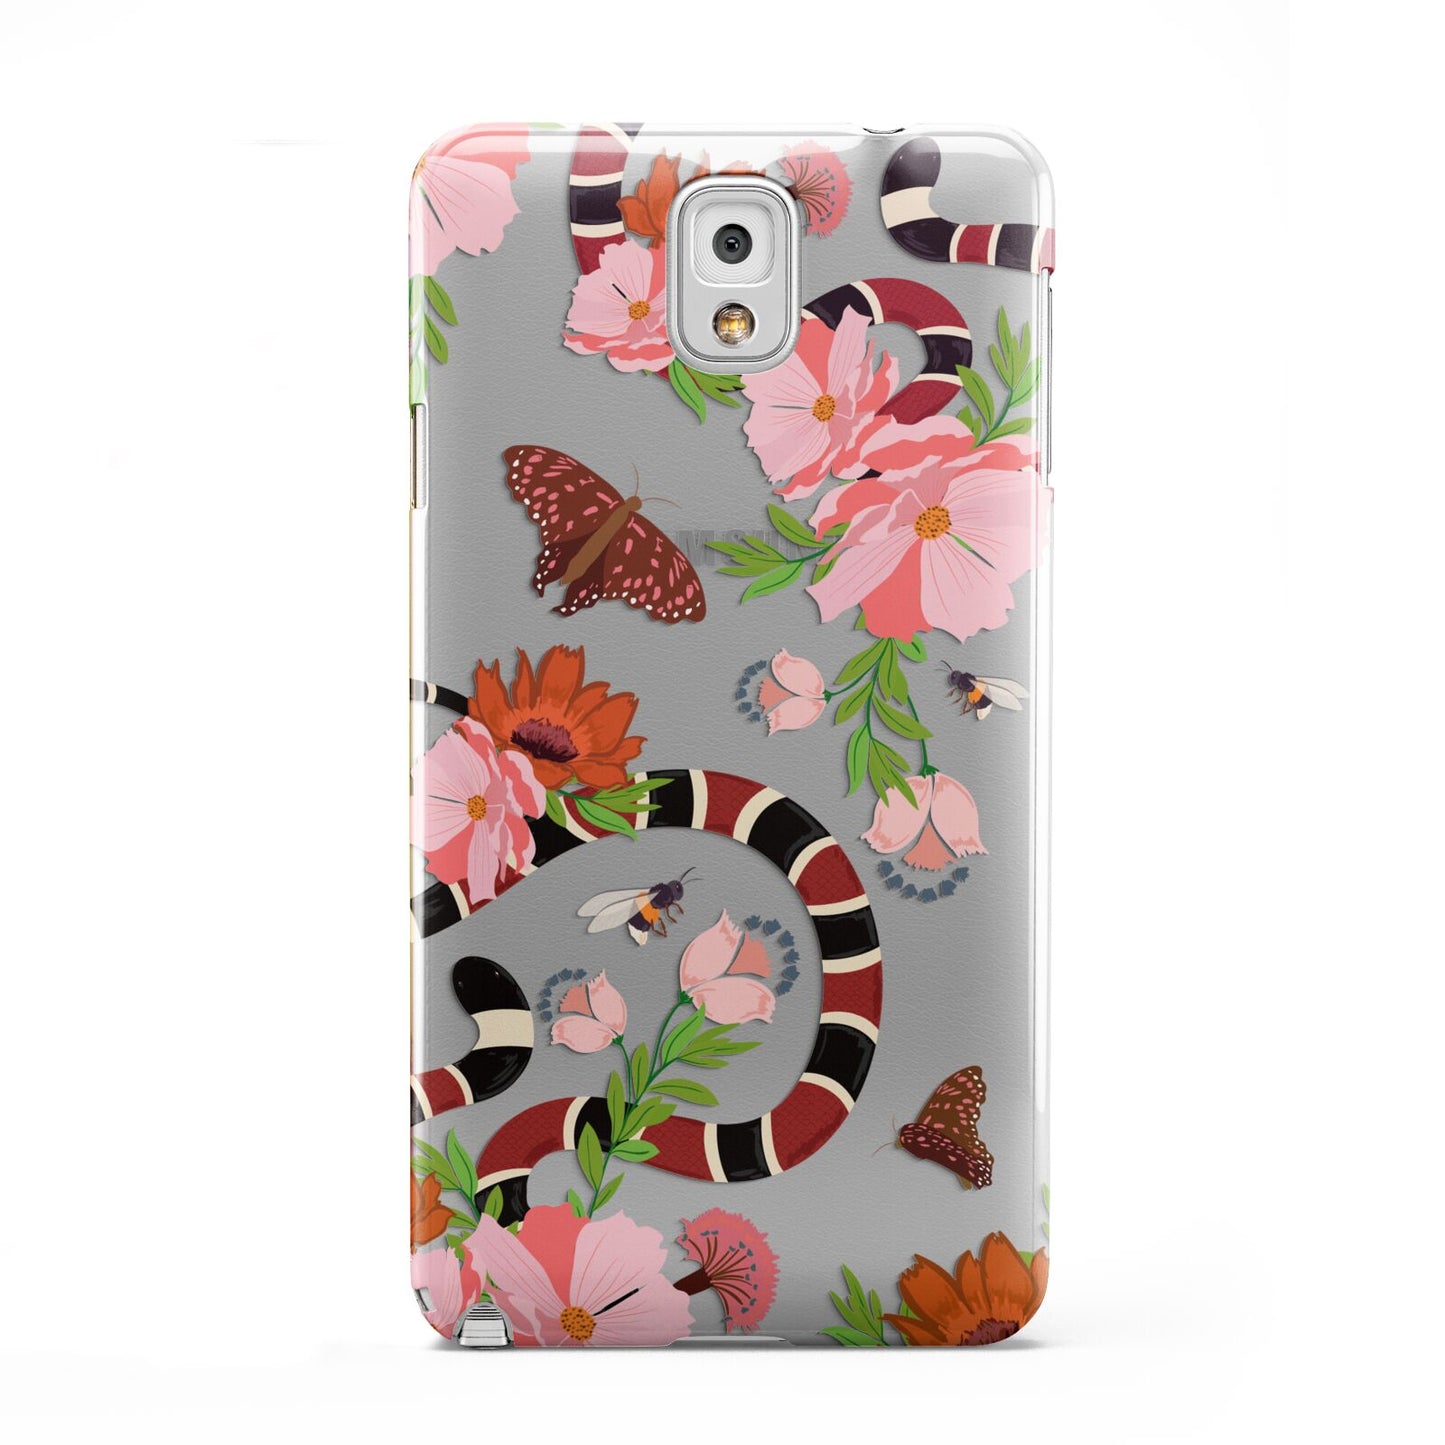 Floral Snake Samsung Galaxy Note 3 Case